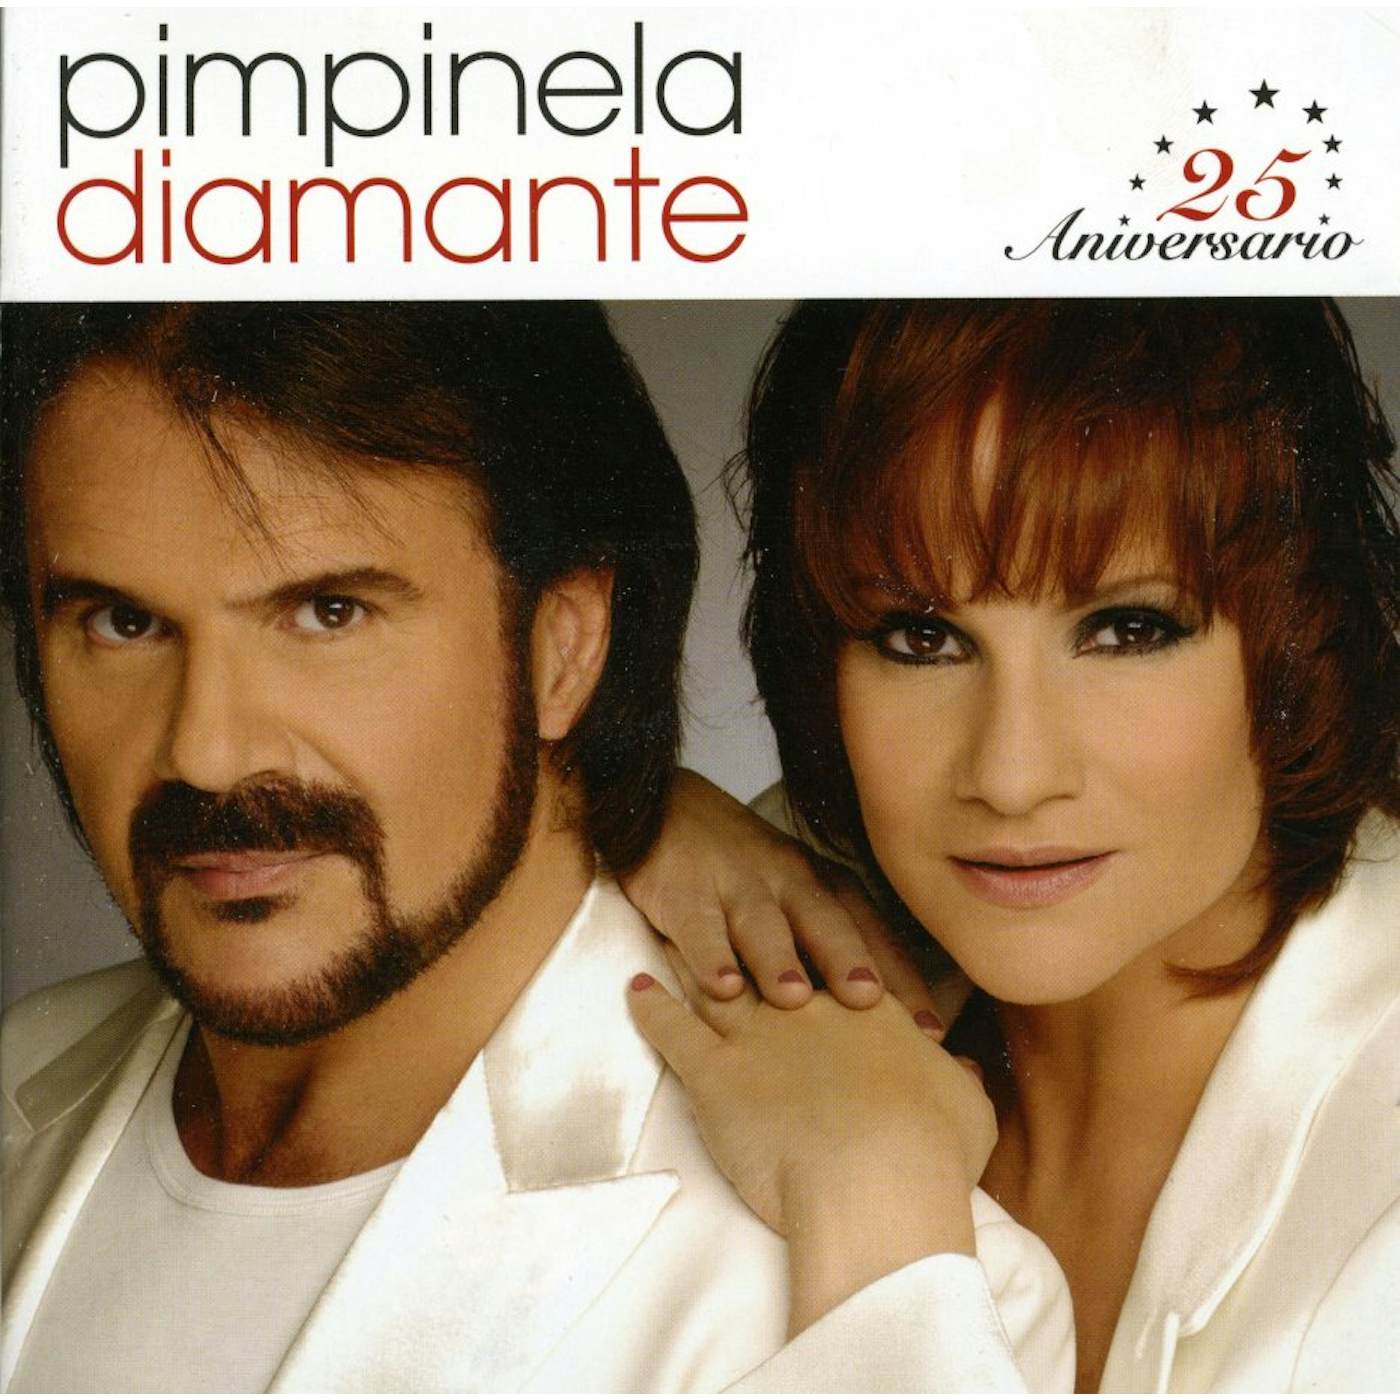 Pimpinela DIAMANTE 25 ANIVERSARIO CD